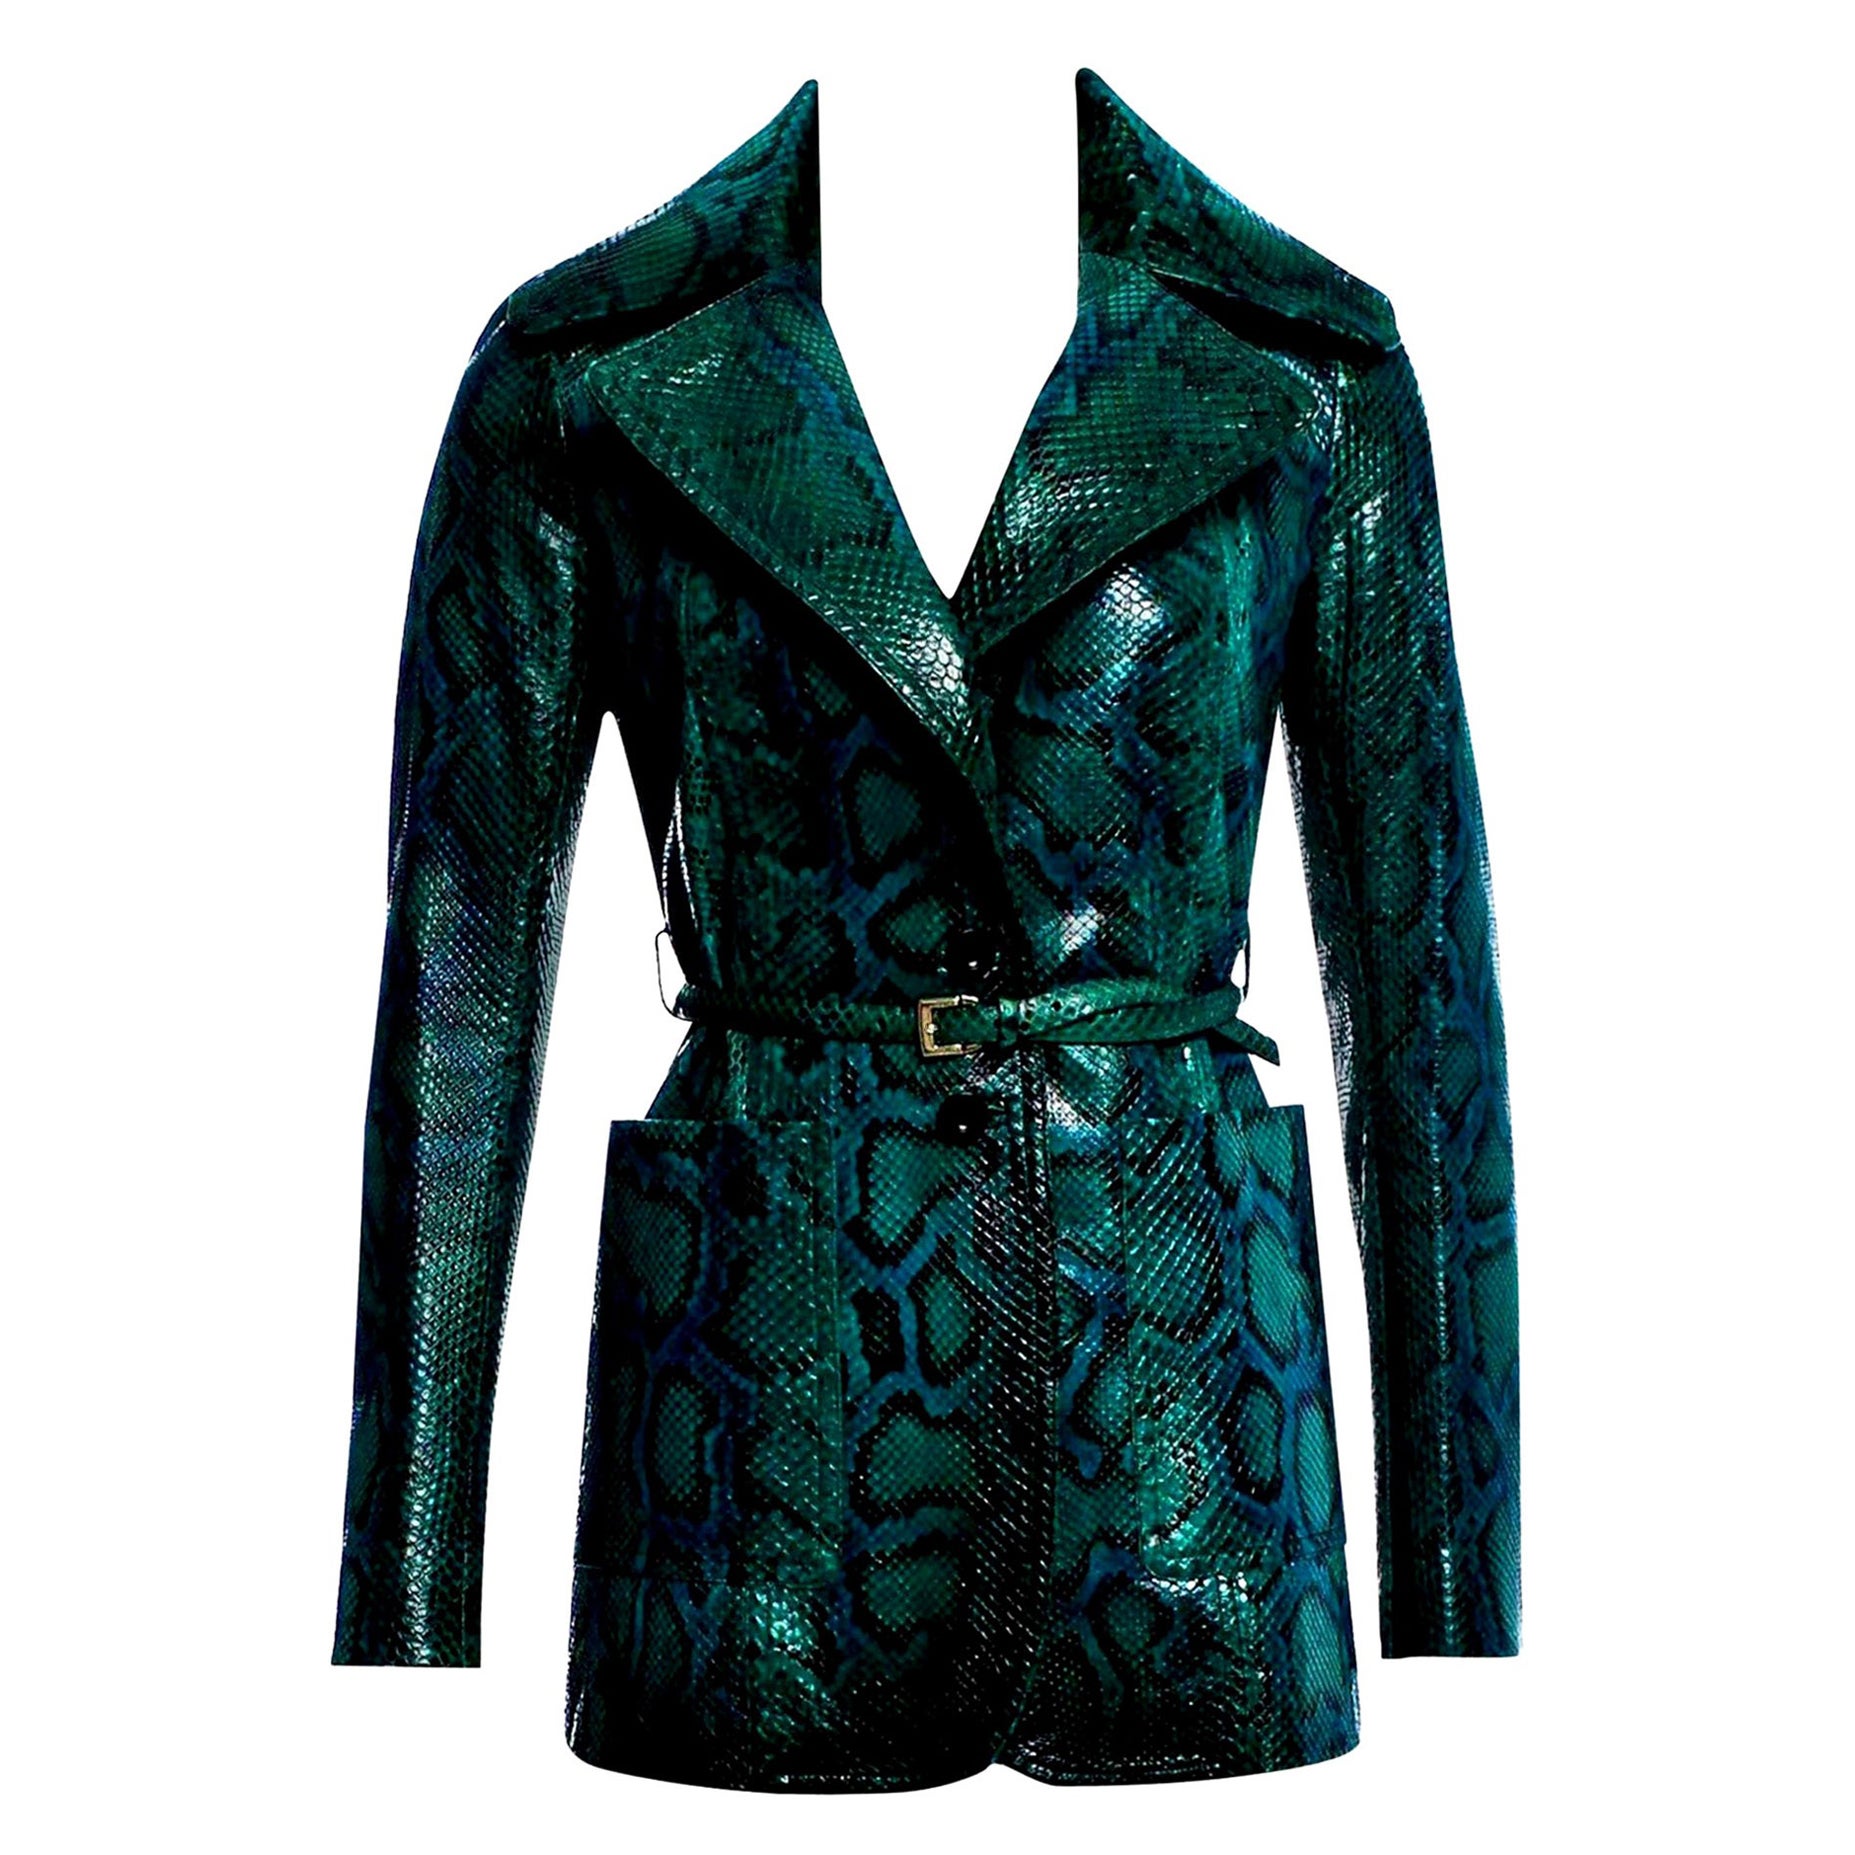 New Rare Gucci 90th Anniversary Python Snakeskin Jacket Coat Blazer $14.650 For Sale